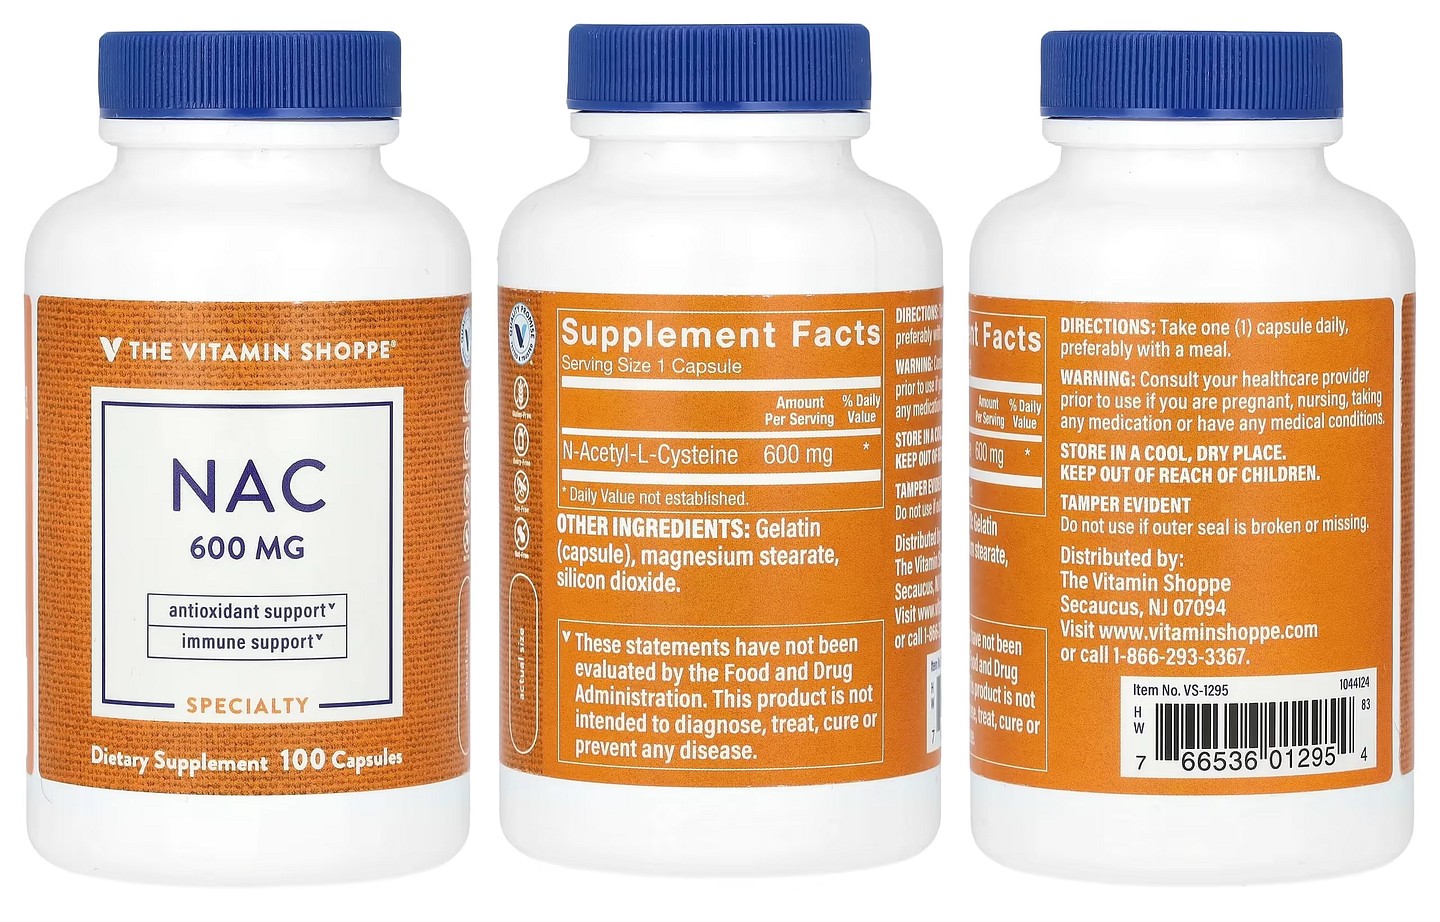 The Vitamin Shoppe, NAC packaging